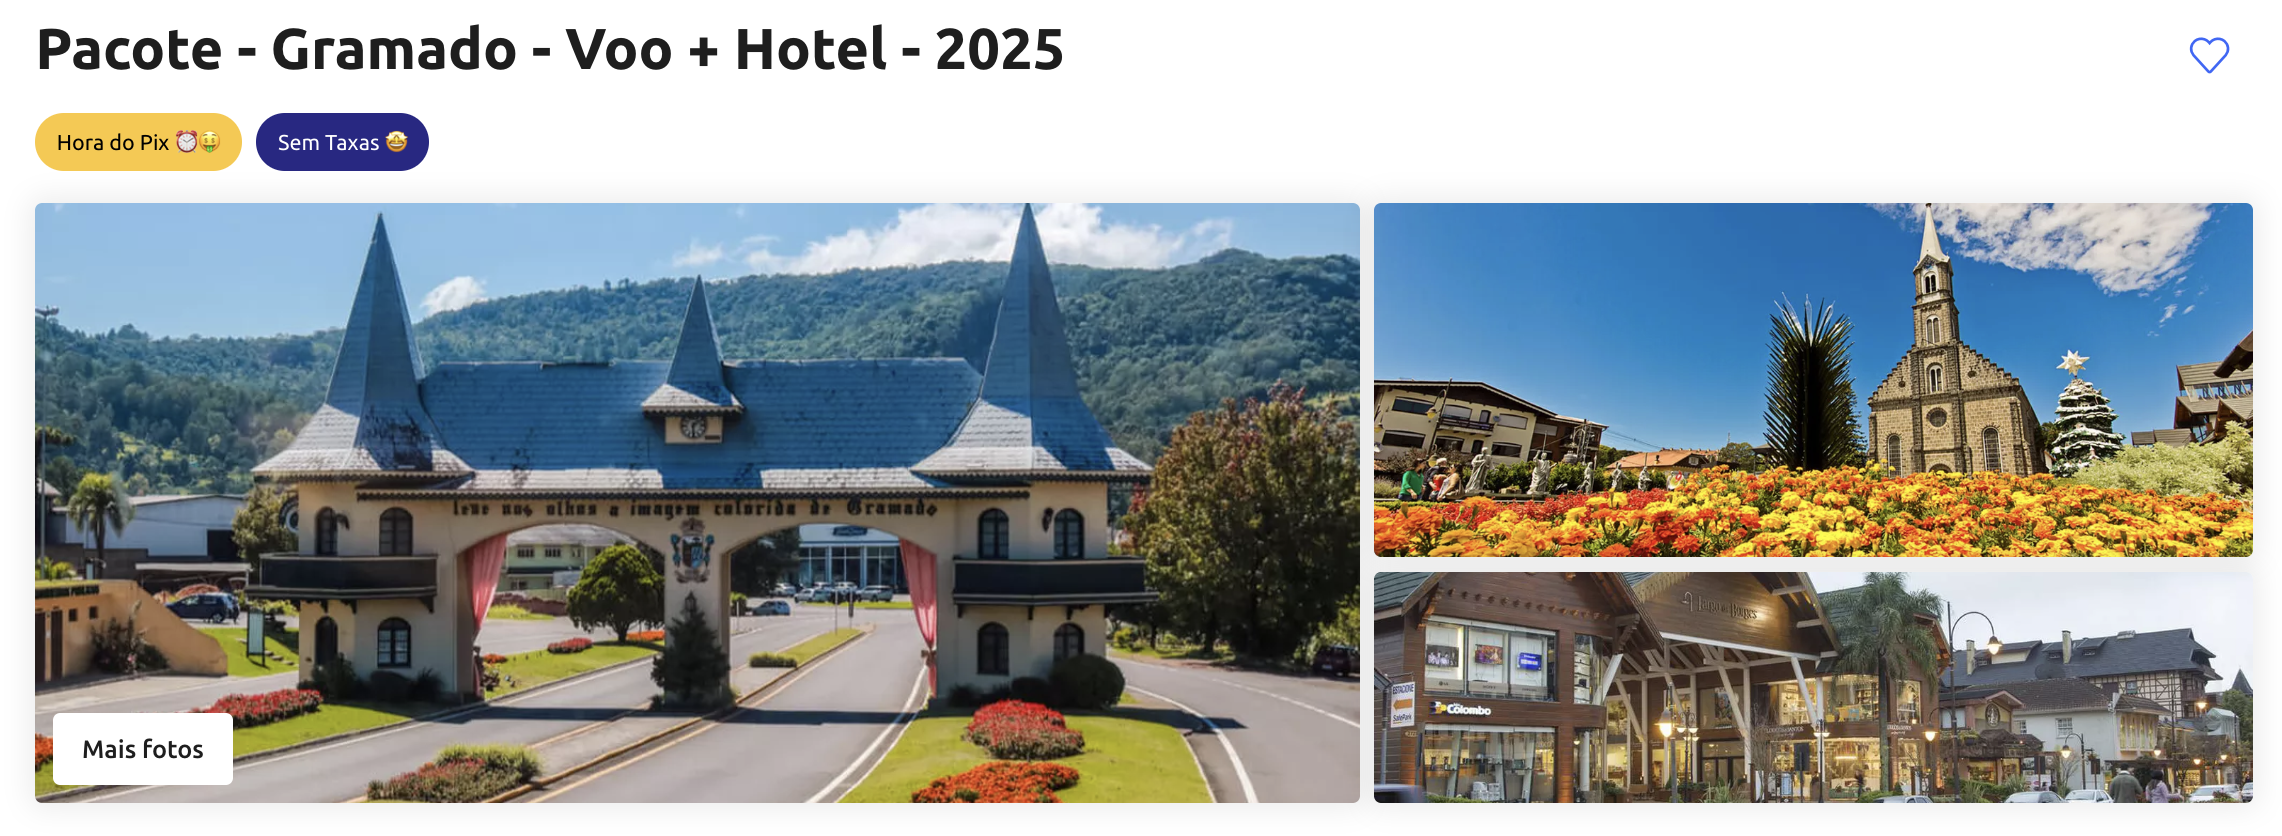 Pacote - Gramado - Voo + Hotel - 2025